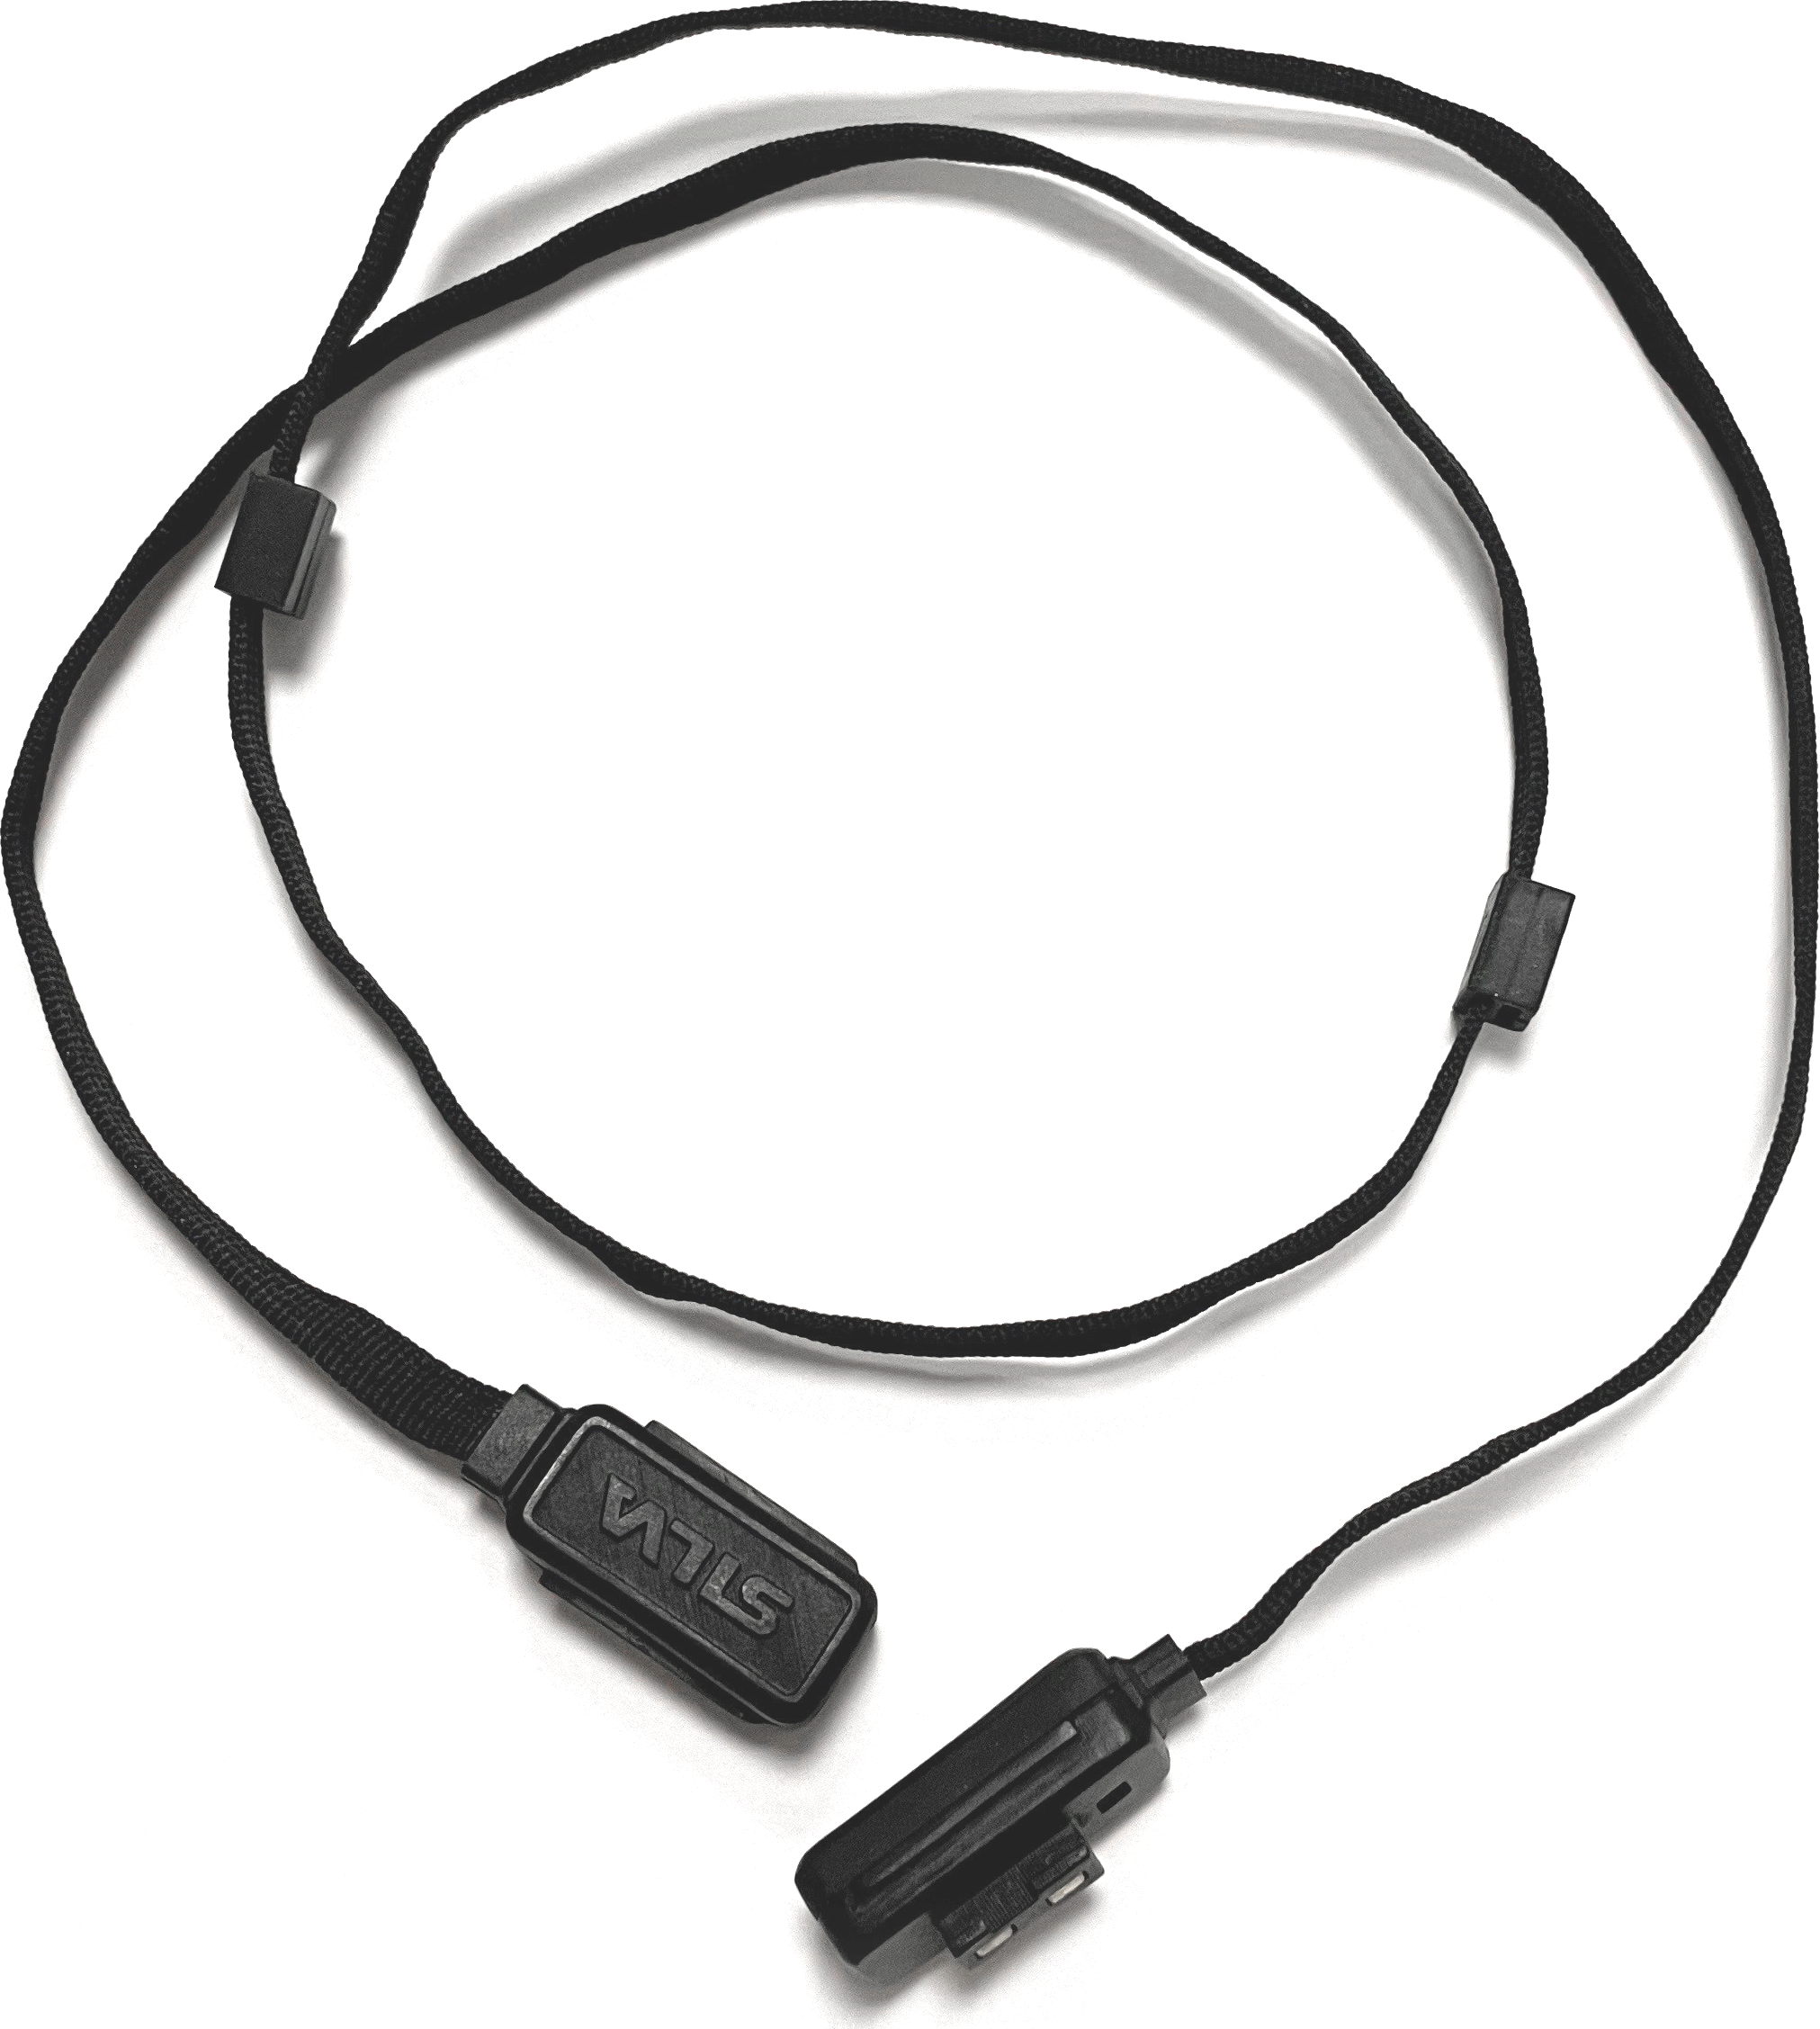 Silva Silva Free Extension Cable 40cm Black No Size, Black